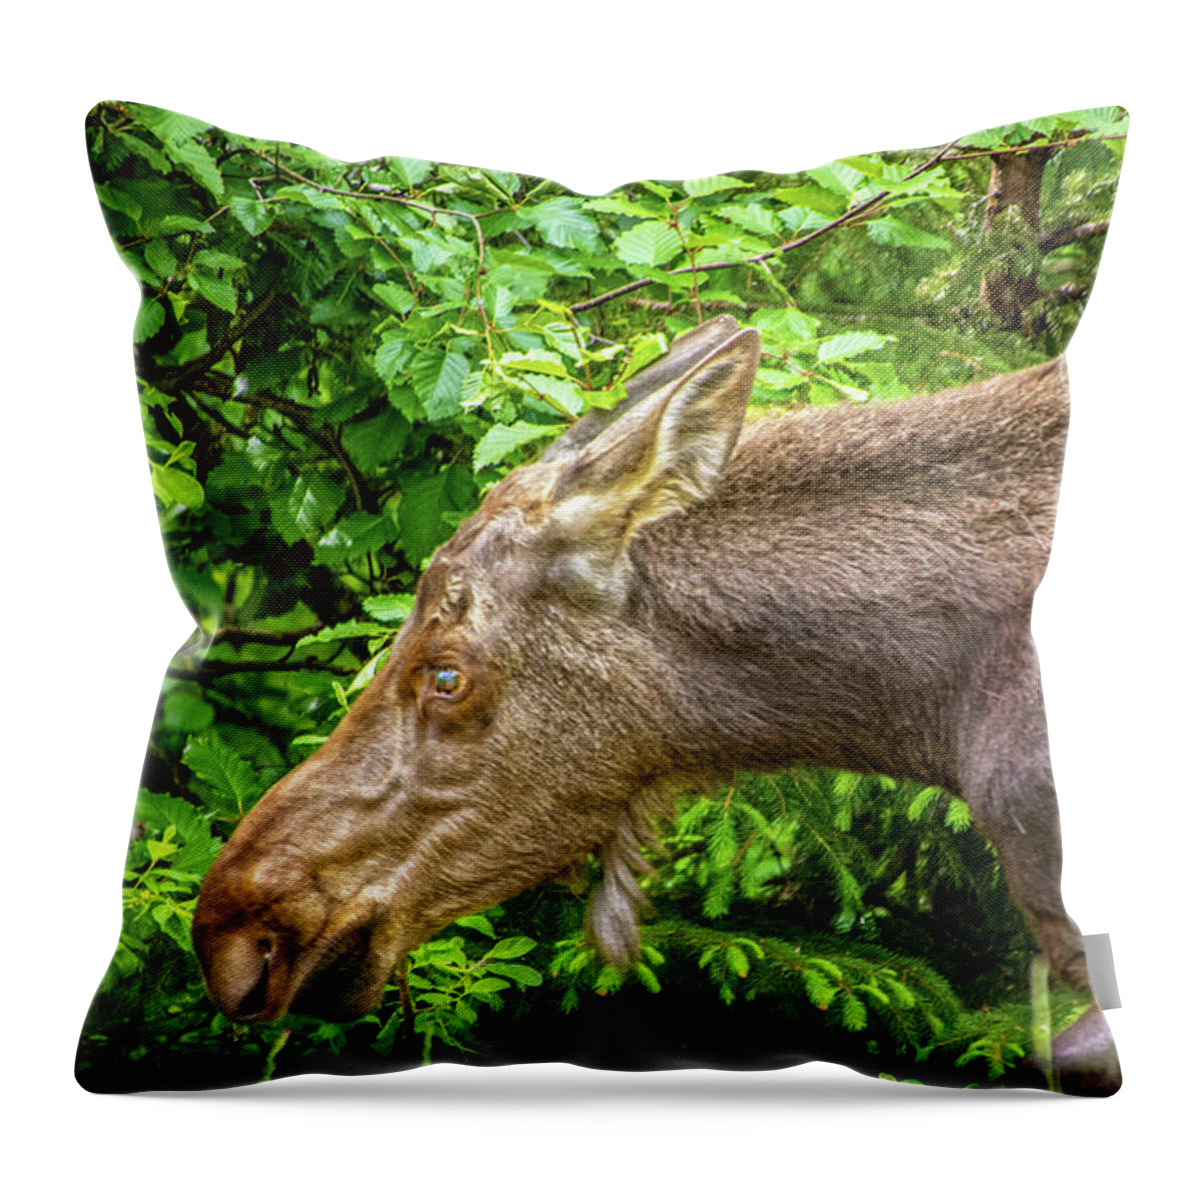 Close Up Throw Pillow featuring the photograph Moose by Susan Vineyard